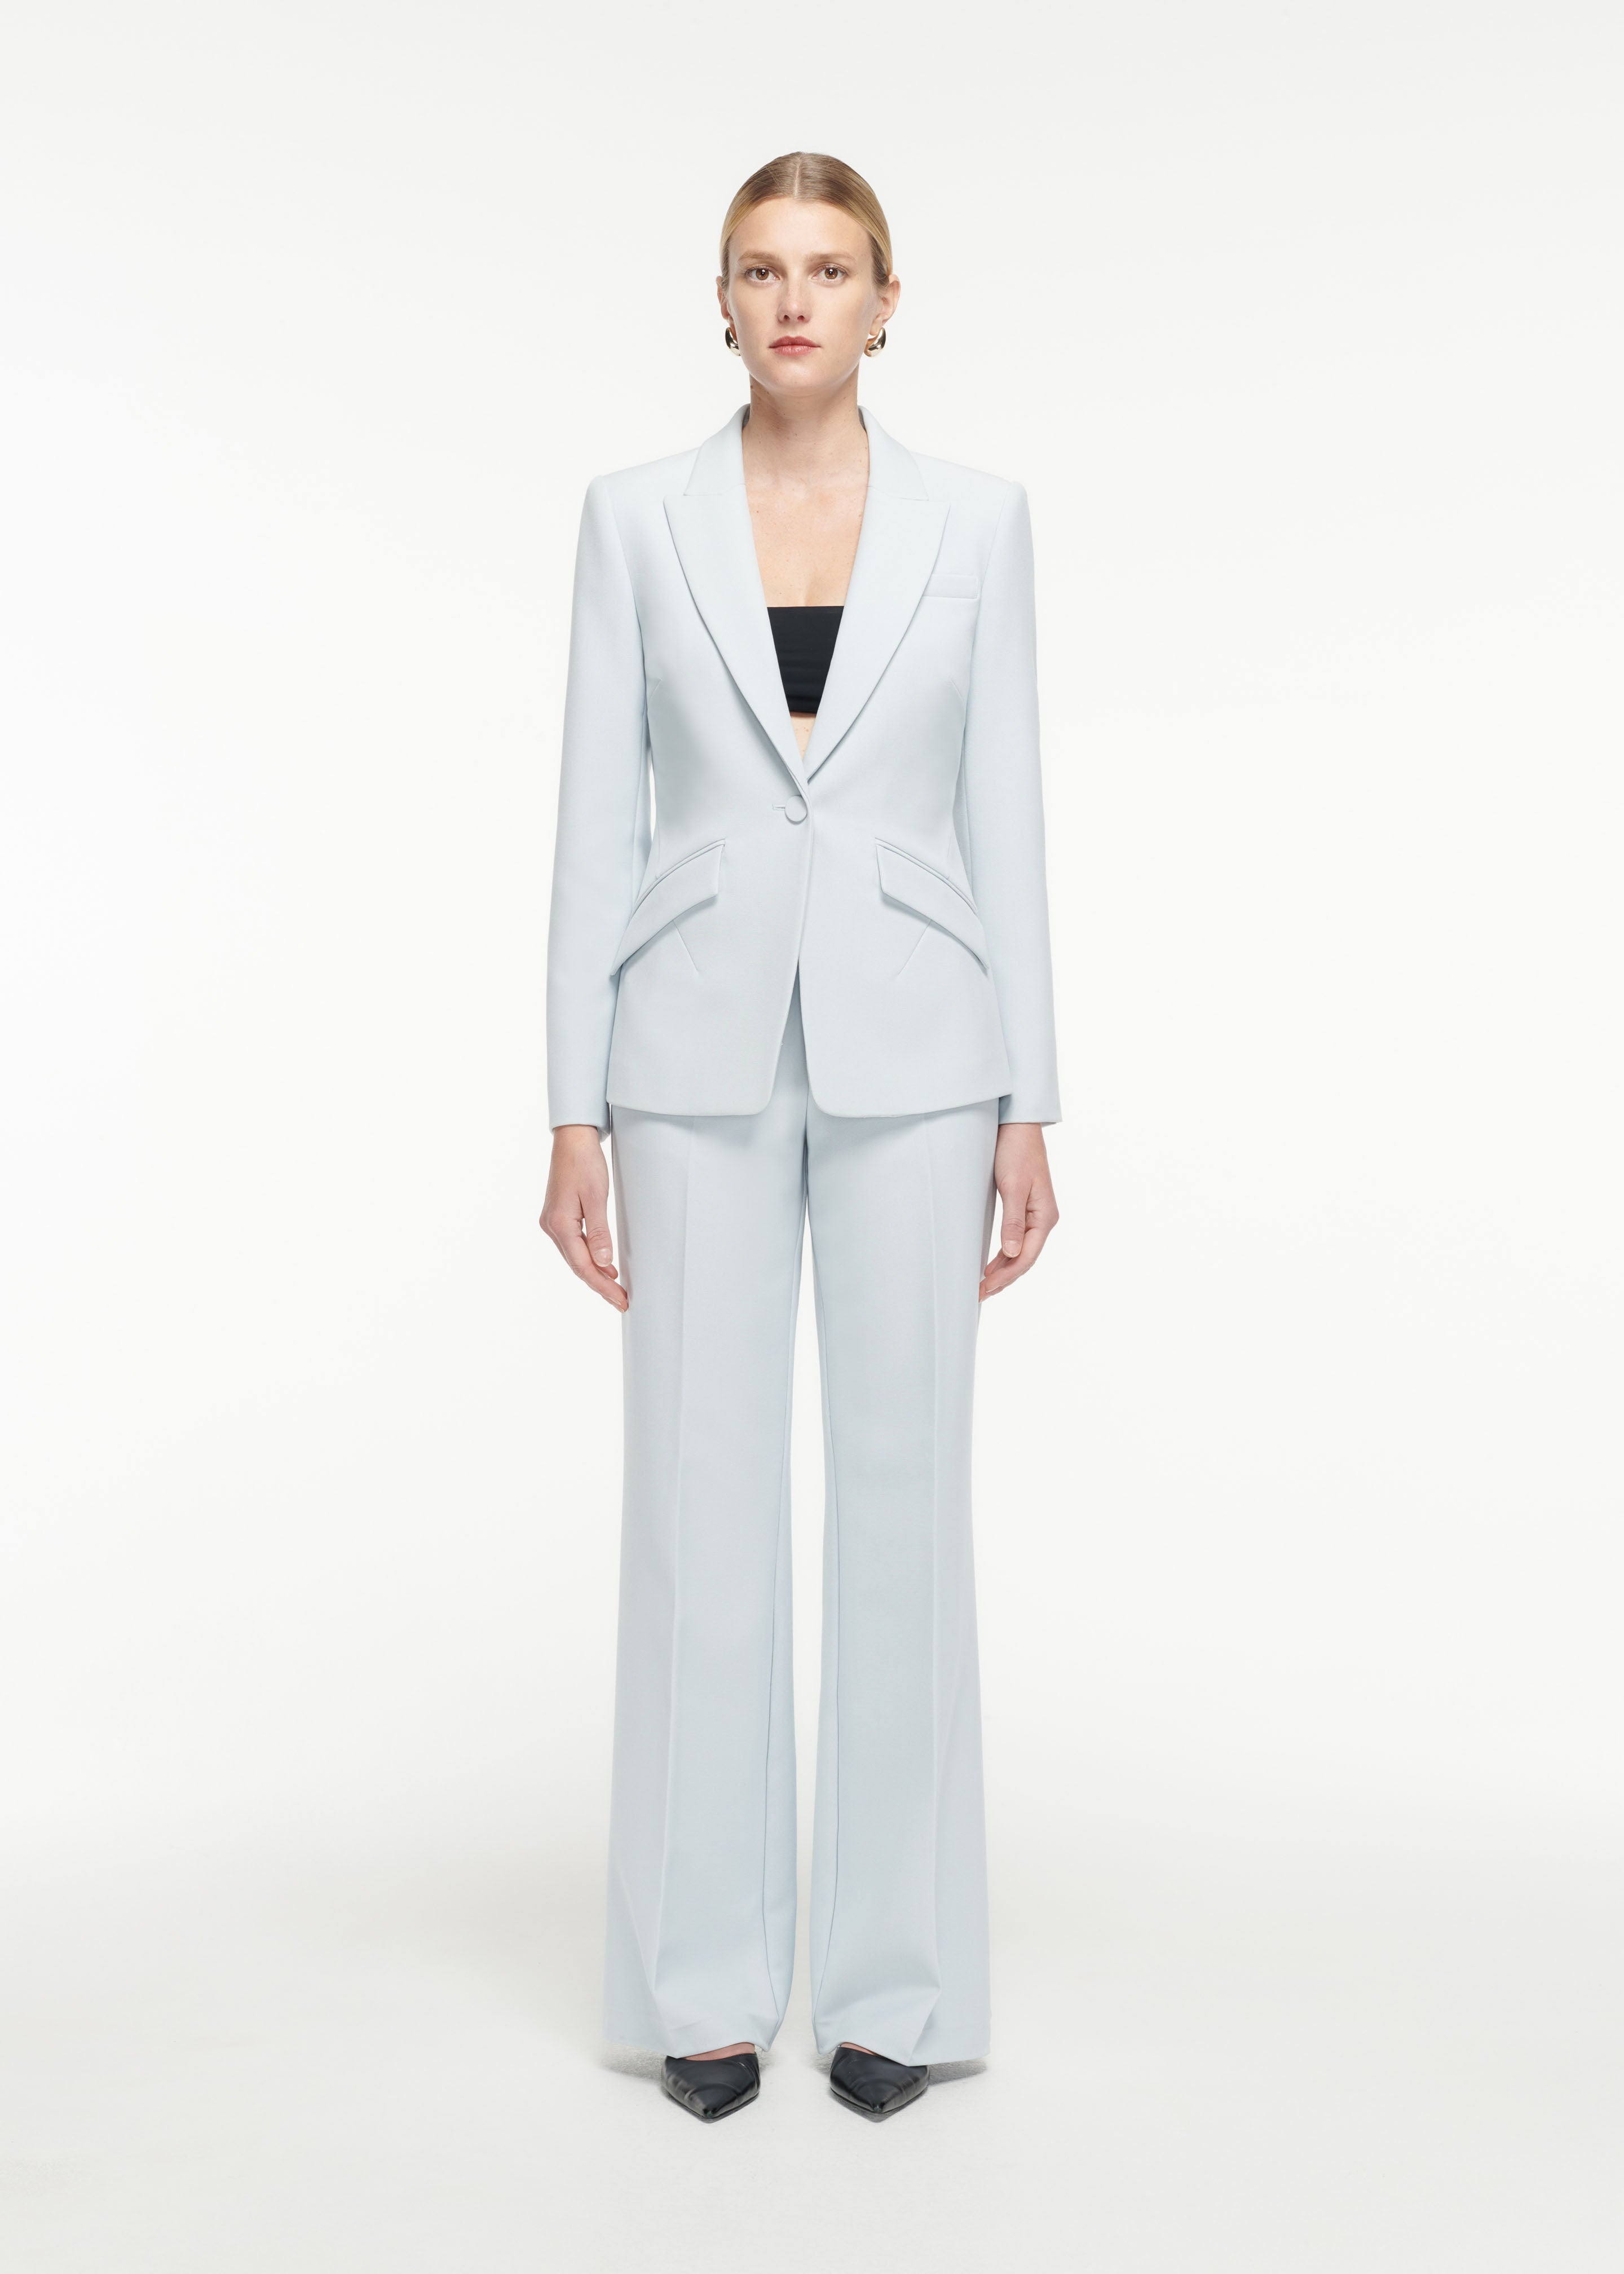 Shop Women's Designer Silk Flowy Pants Palazzo Trousers